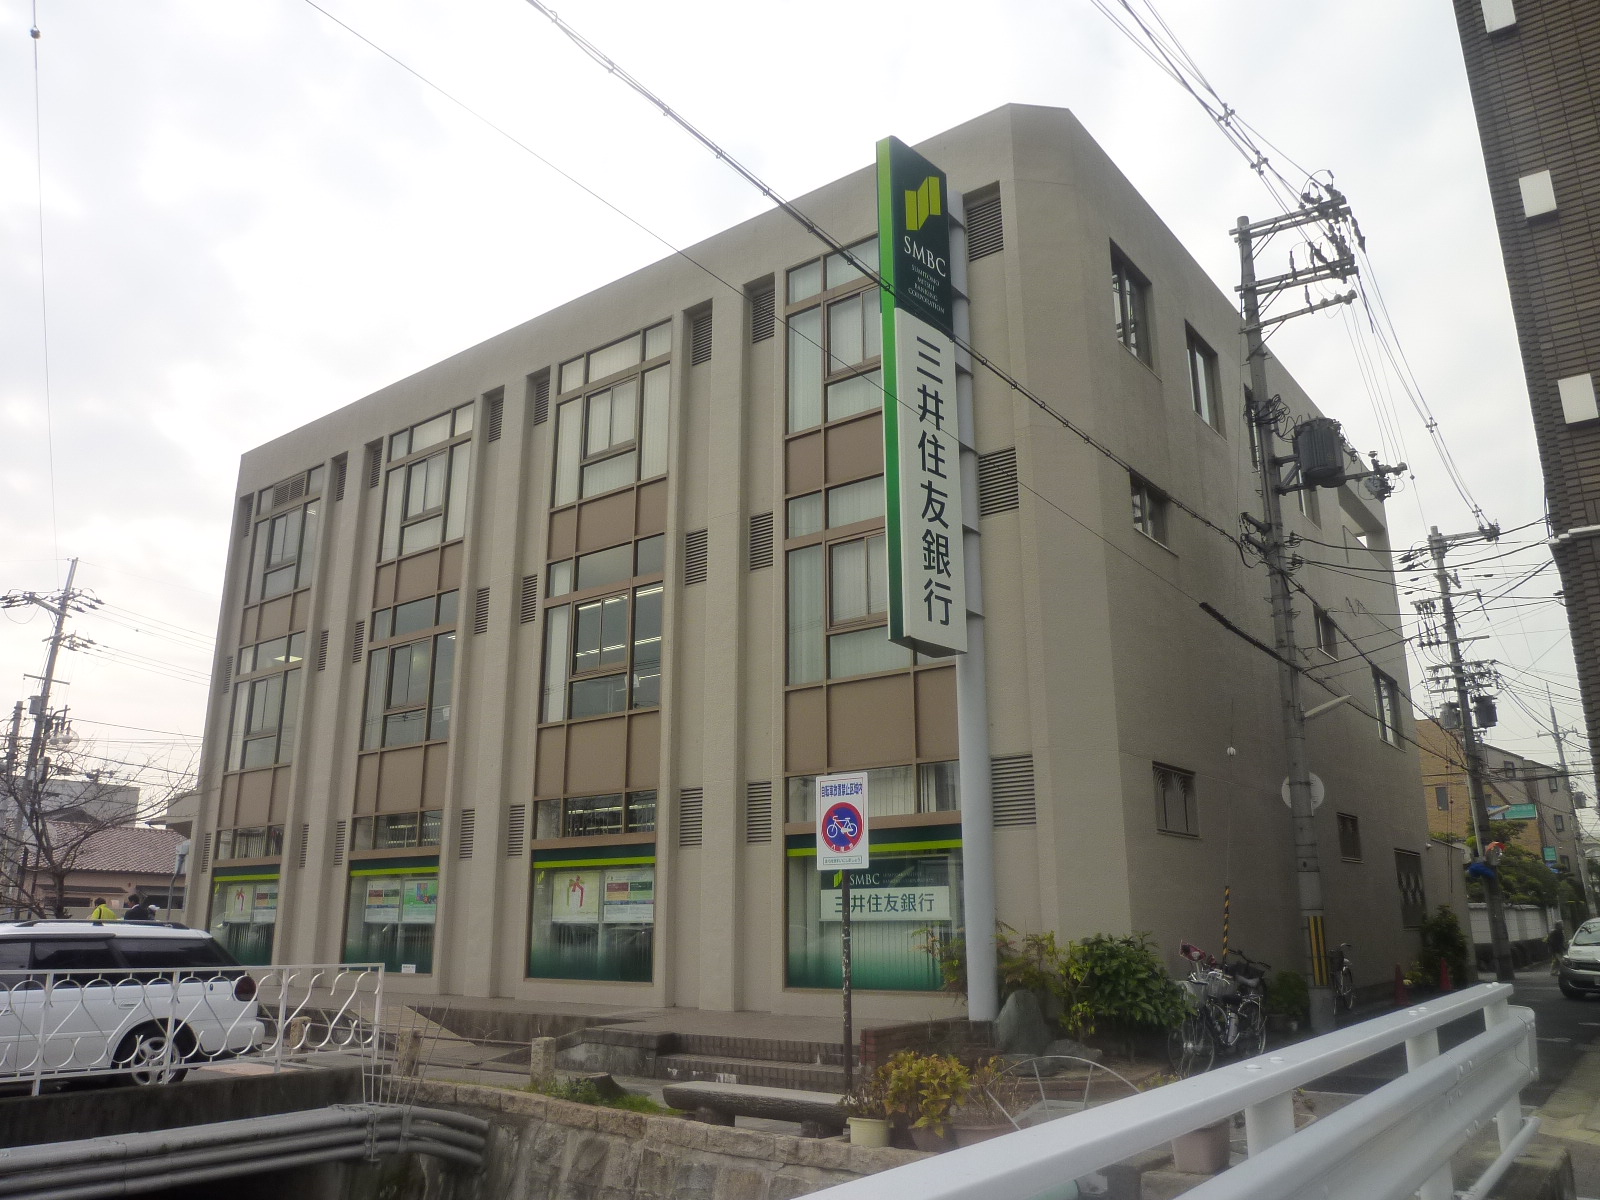 Bank. 286m to Sumitomo Mitsui Banking Corporation Yamamoto Branch (Bank)